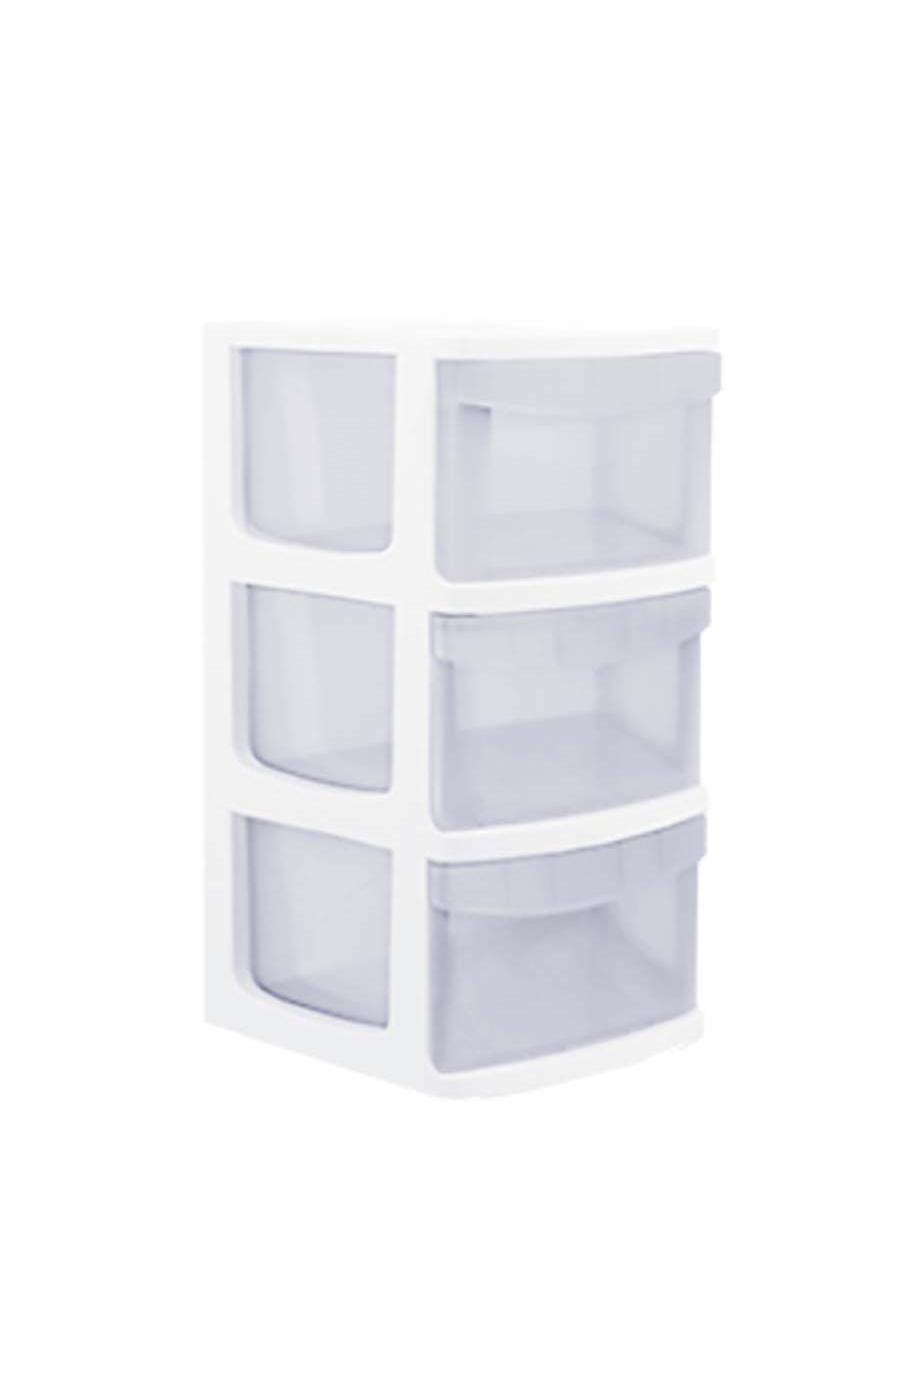 Starplast 3-Drawer Medium Plastic Storage Cart - White - Shop Closet &  Cabinet Organizers at H-E-B